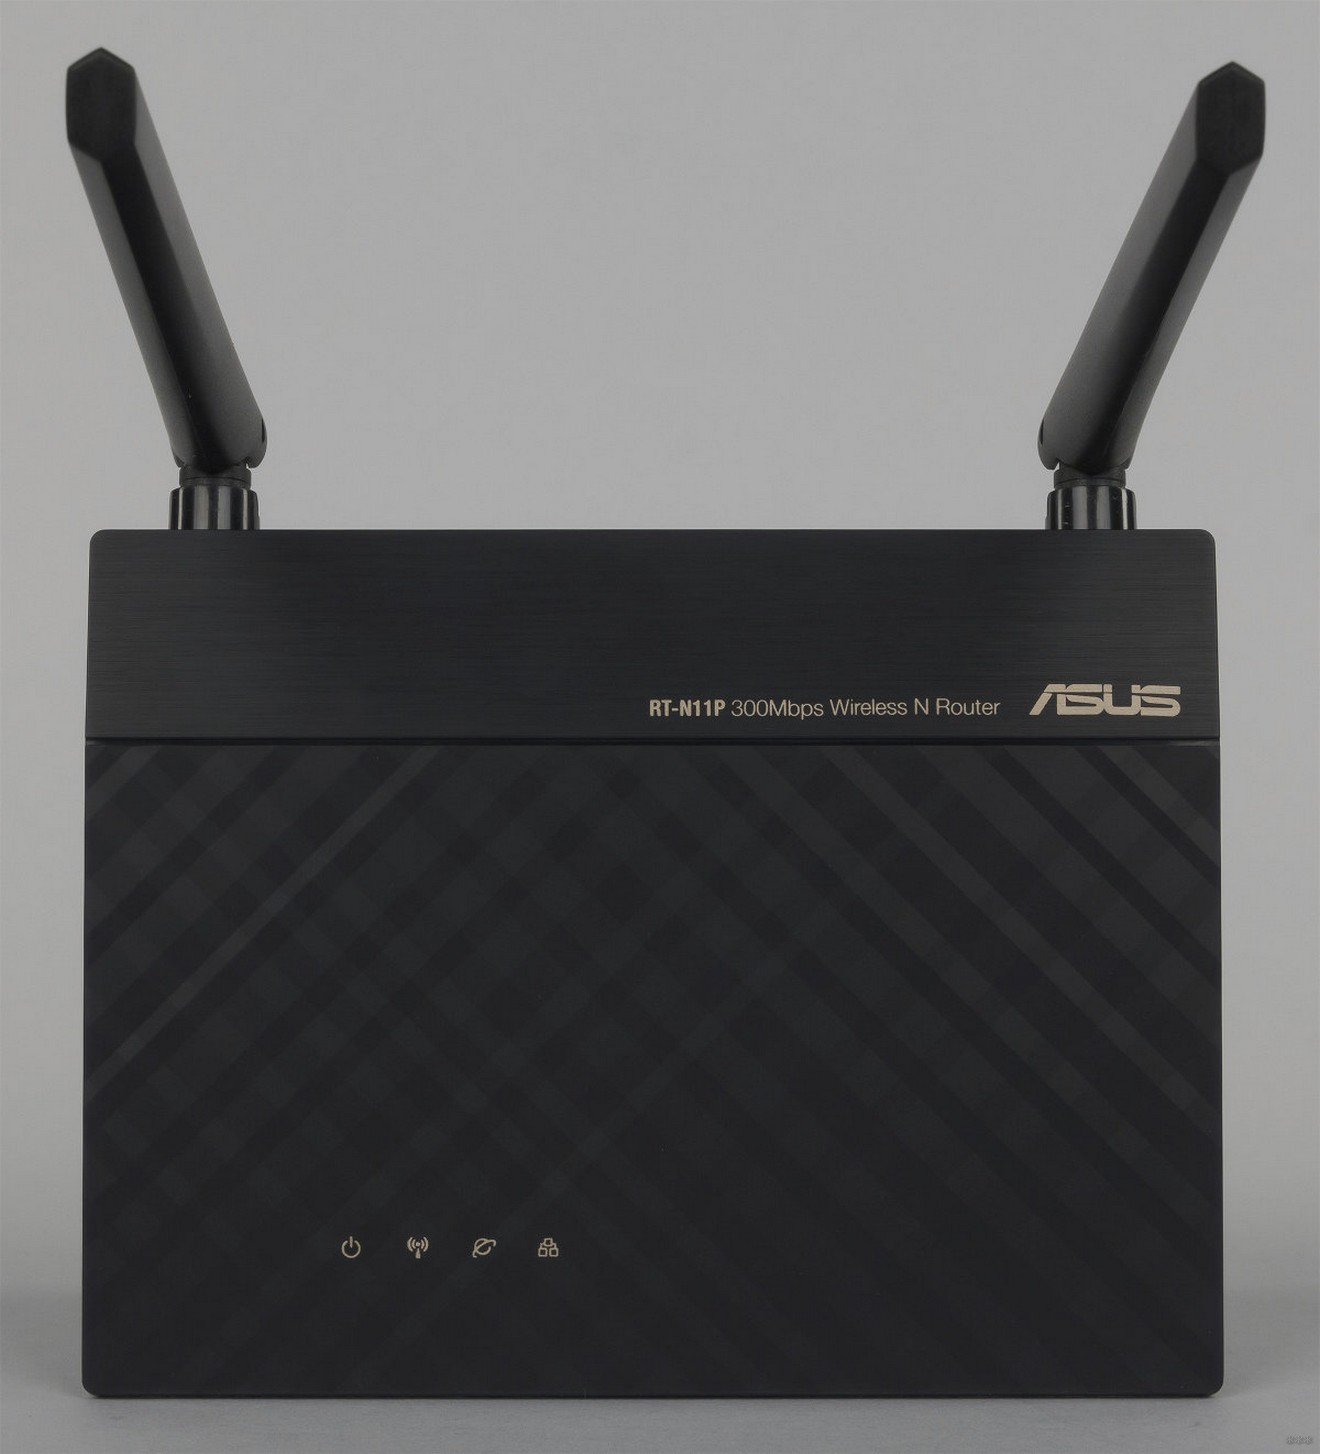 Как настроить Wi-Fi роутер ASUS RT-N11P: пошаговое руководство